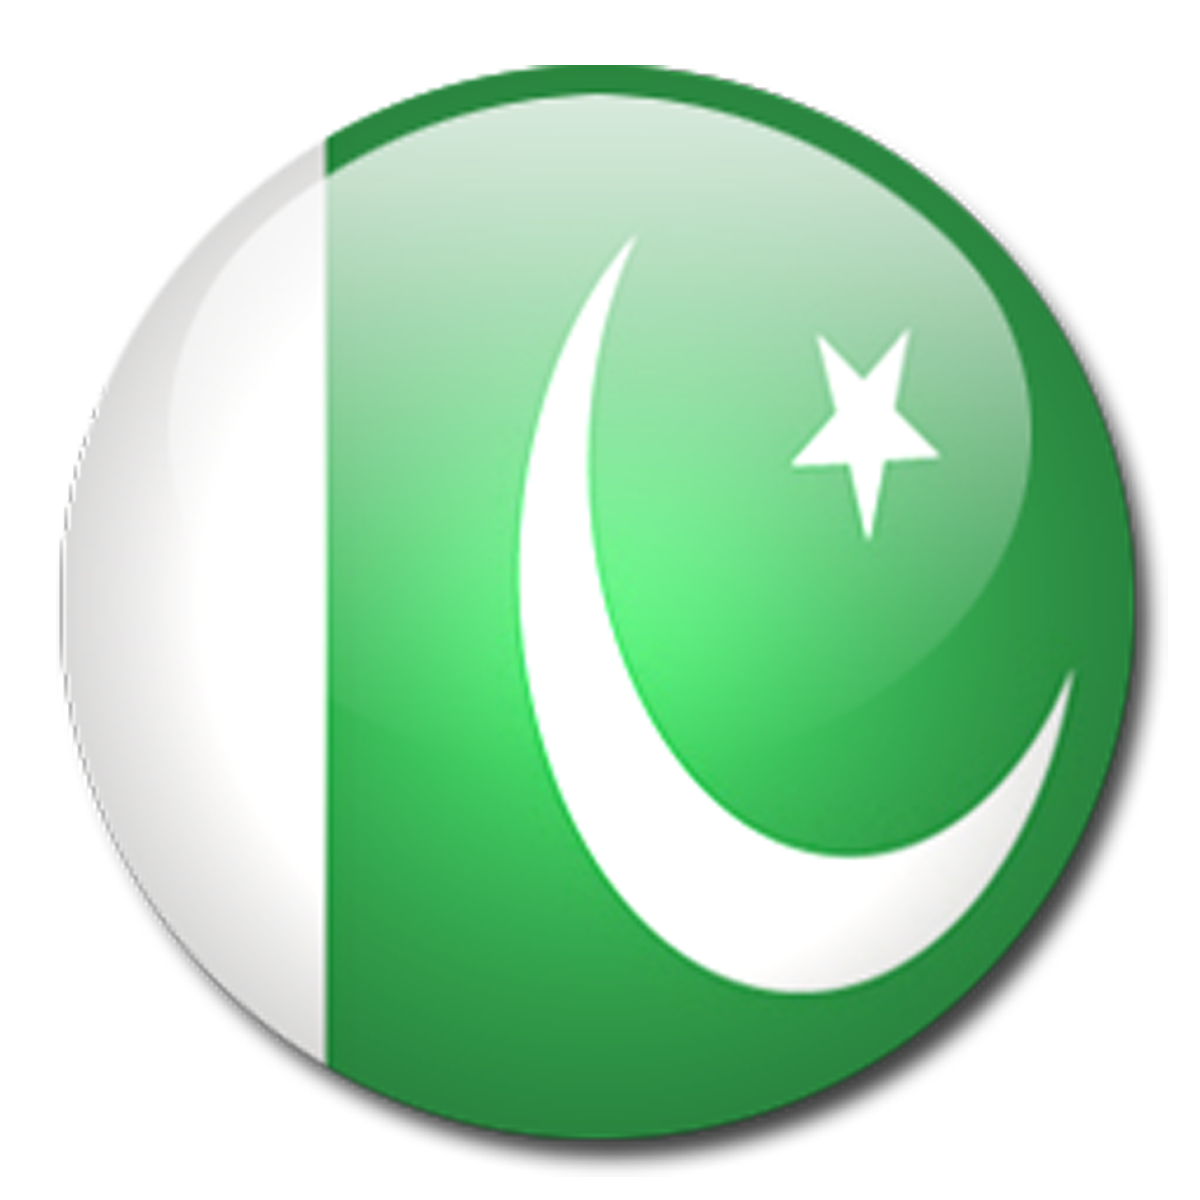 https://blogger.googleusercontent.com/img/b/R29vZ2xl/AVvXsEjN09FSShnj713FiFDNKlCiKMNcU6zOQEWuSqGz0zYBdBZEBCDZOxnQIVVforCAa8pKV8ZrM3aq8F6YG6j9cuDQ5jDBVm1eB5ixGWBJNUT7Sh995_tVNRPFt9LBupBm-lSwYD8bpJ6RSicu/s1600/Wallpapers+Flag+of+Pakistan+Pakistani+Flag+Graphics+%25284%2529.png